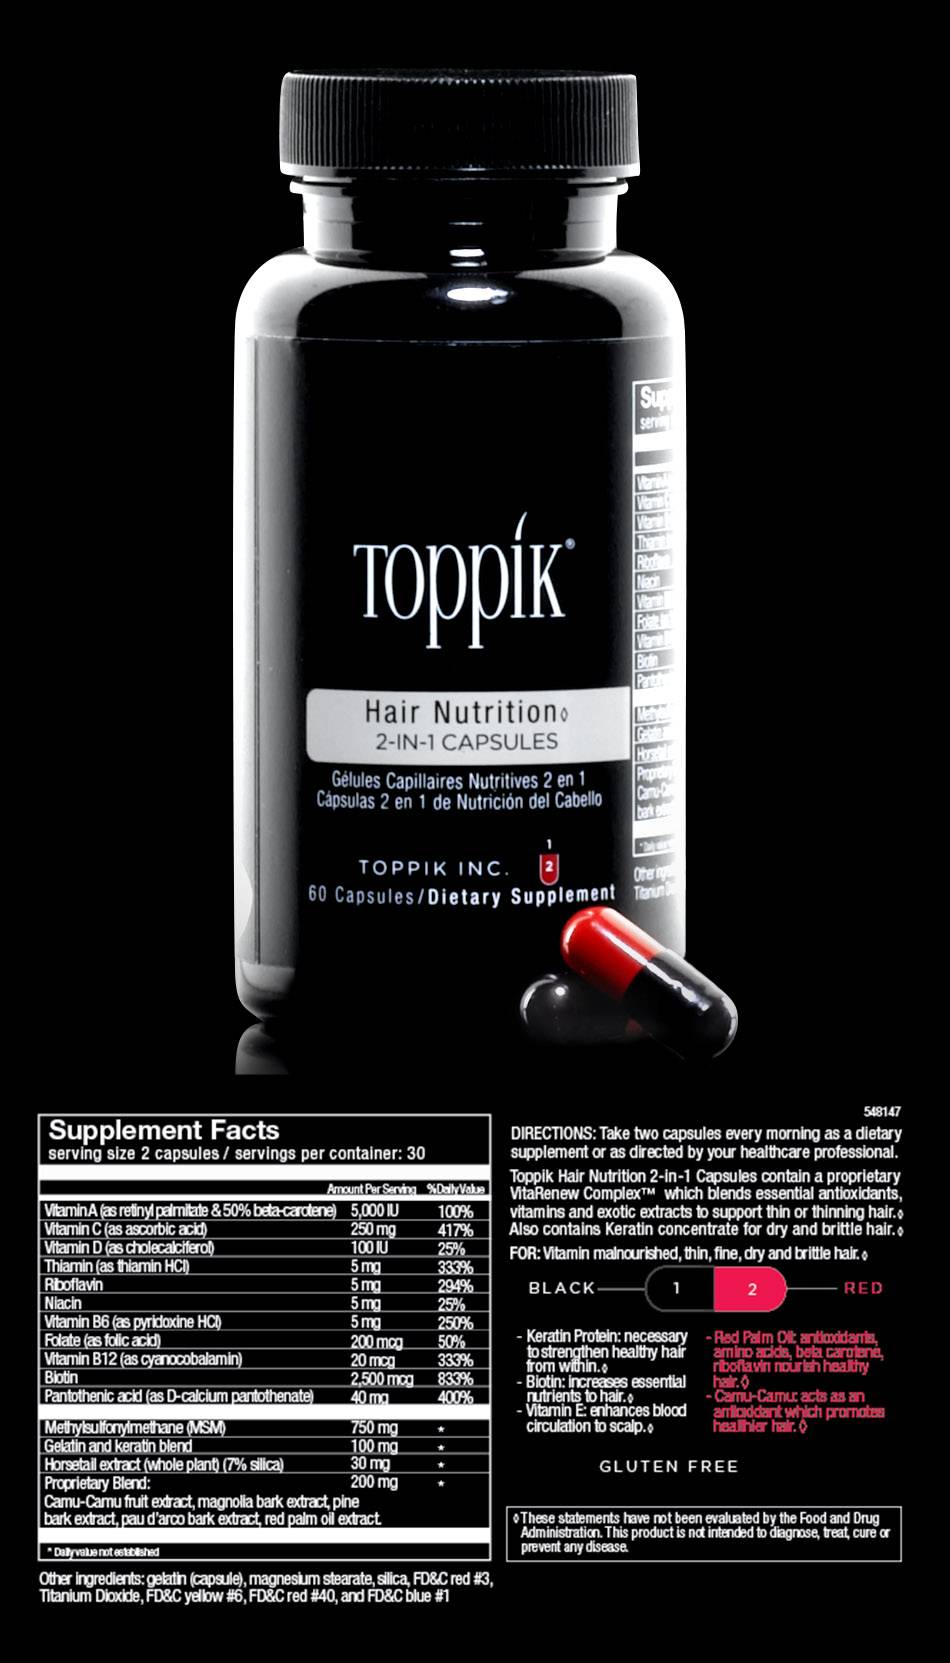 Hair Nutrition de Toppik